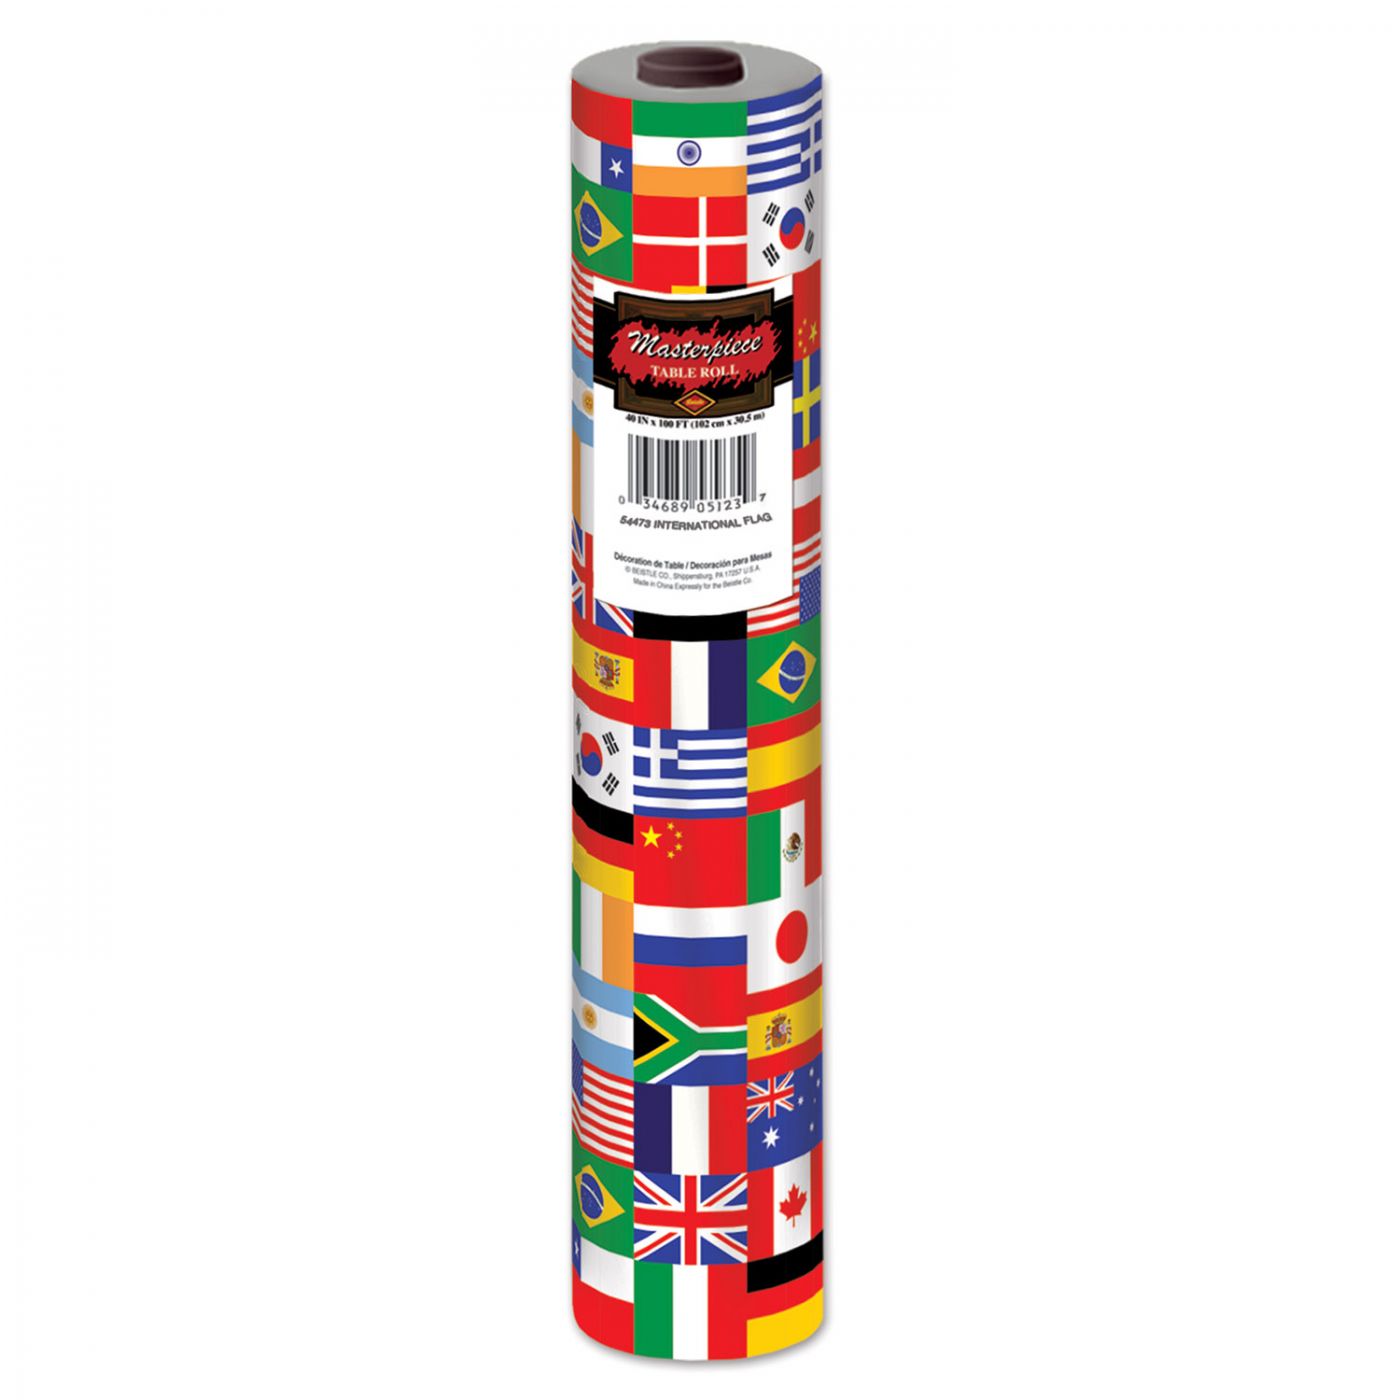 International FlagTable Roll (1) image